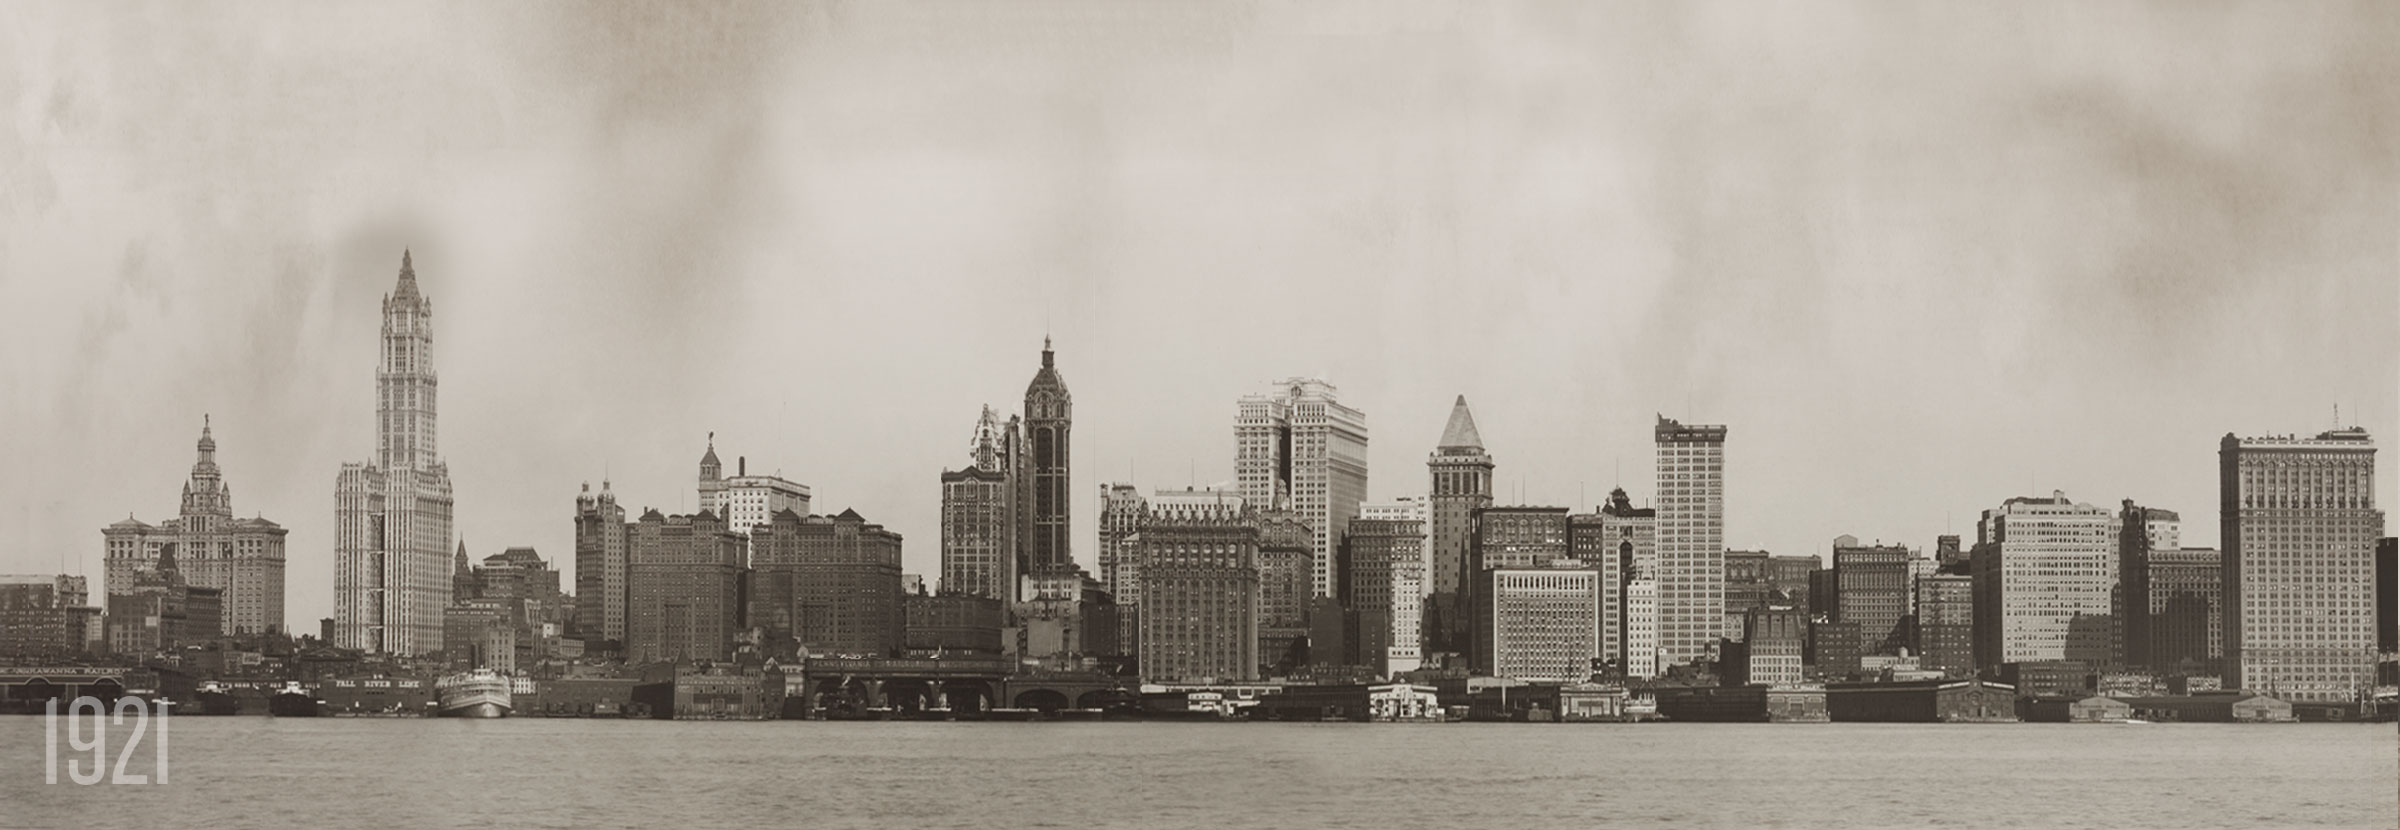 New York Skyline. Irving Underhill, 1921. Library of Congress.